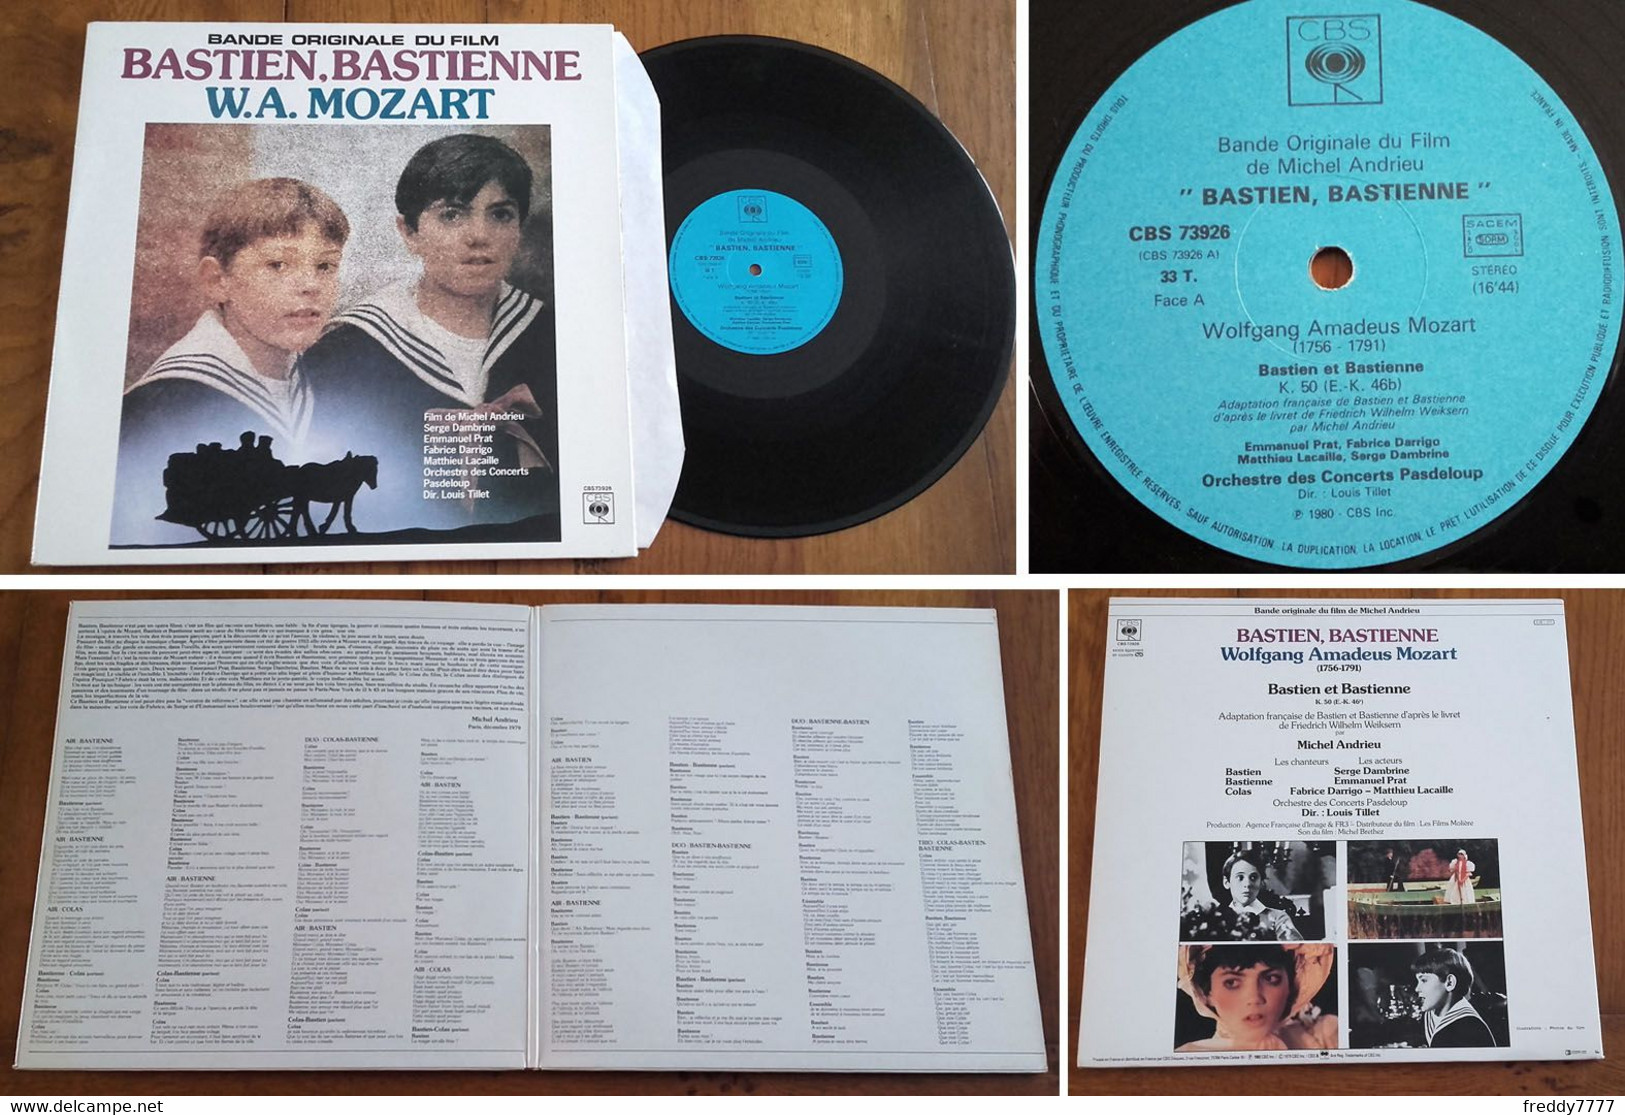 RARE French LP 33t RPM (12") BOF OST "BASTIEN, BASTIENNE" (gatefold P/s, 1985) - Filmmuziek